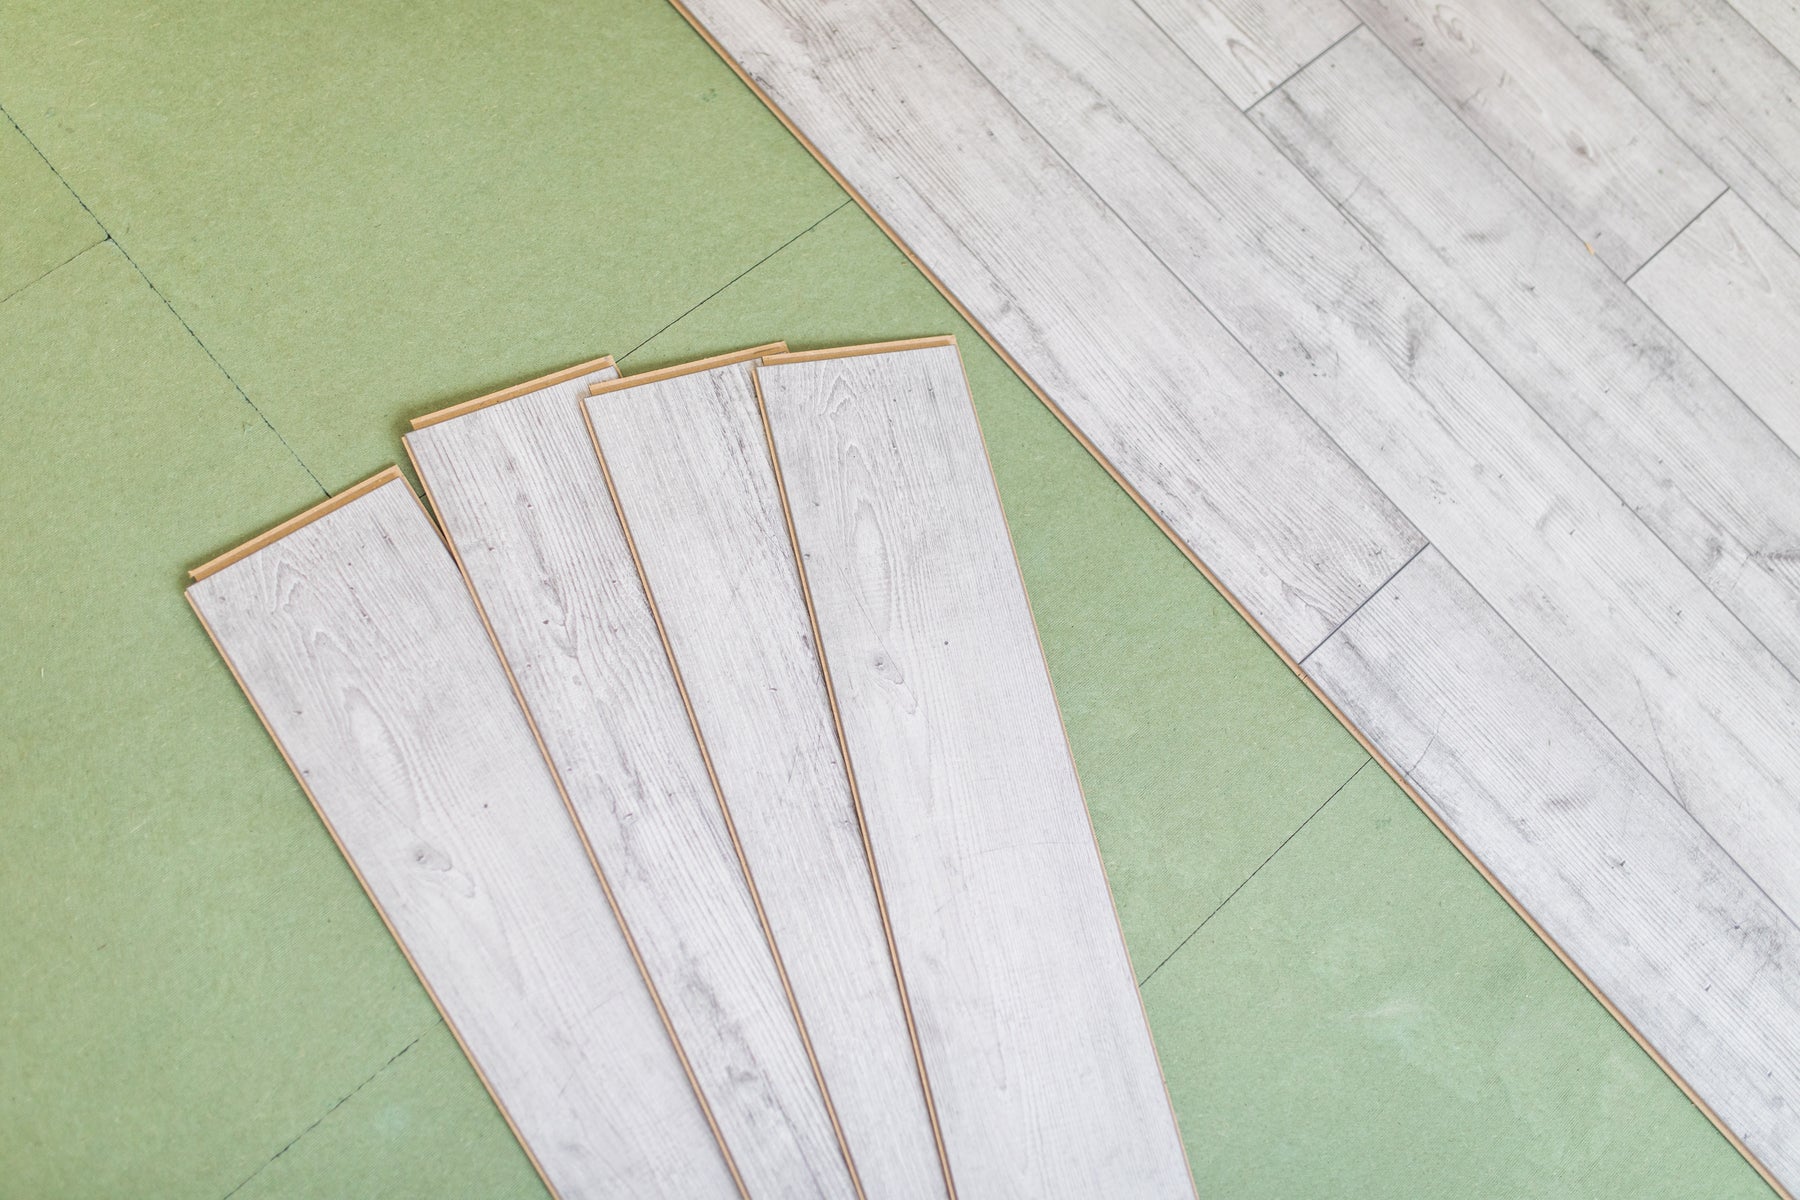 Tile vs Wood Flooring